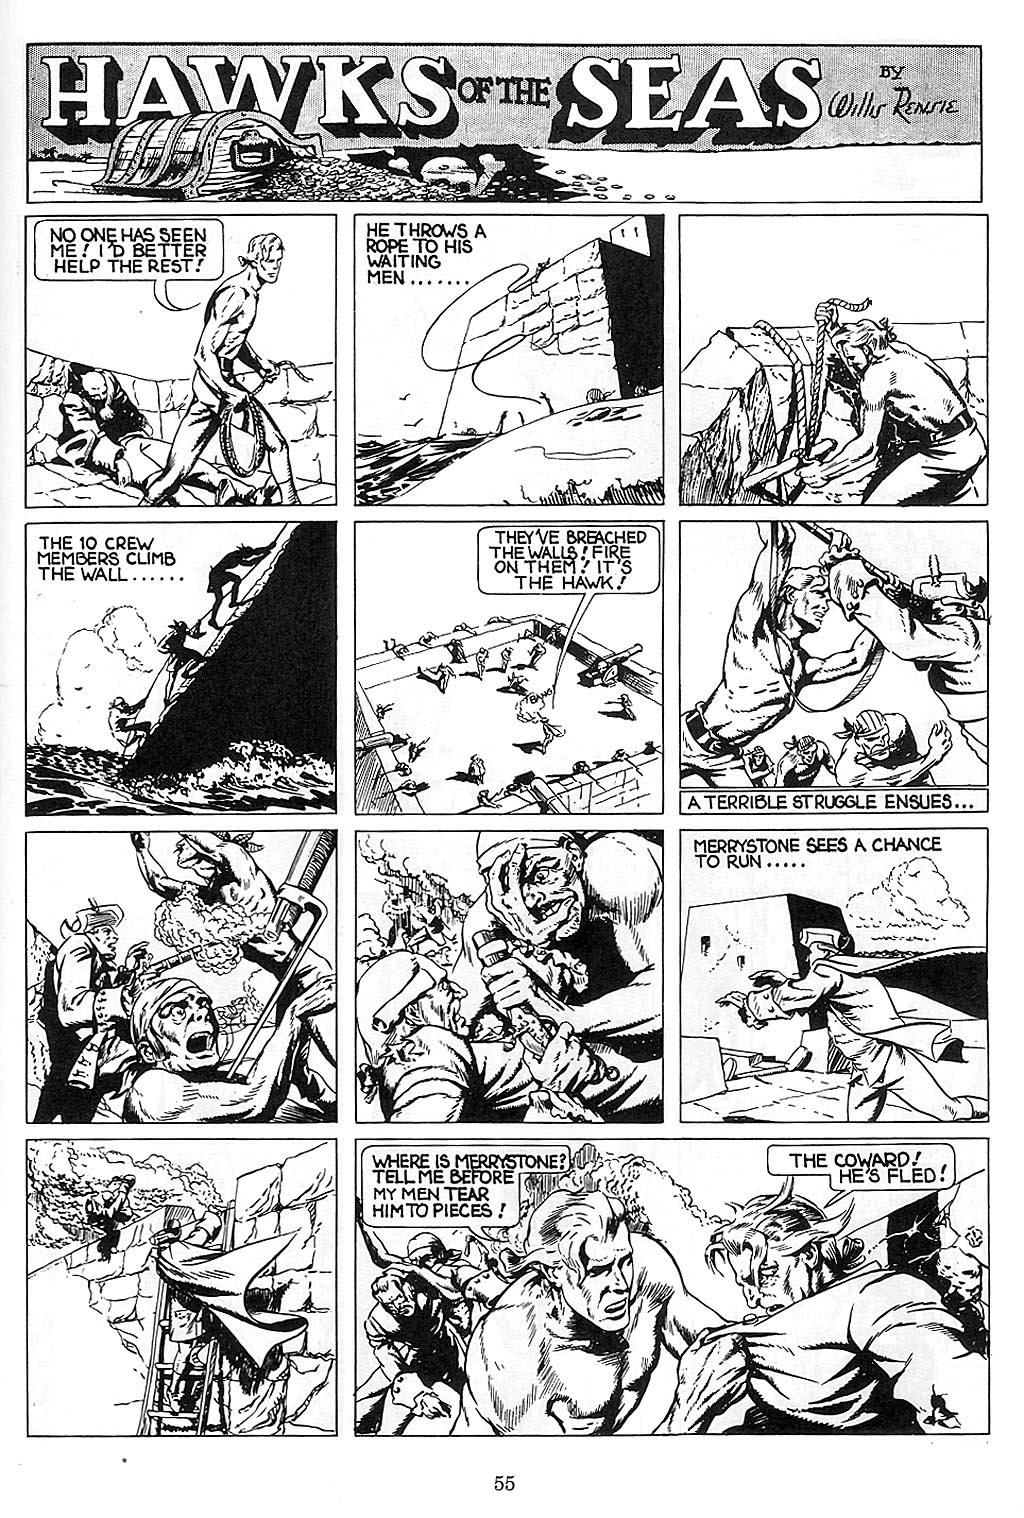 Read online Will Eisner's Hawks of the Seas comic -  Issue # TPB - 56